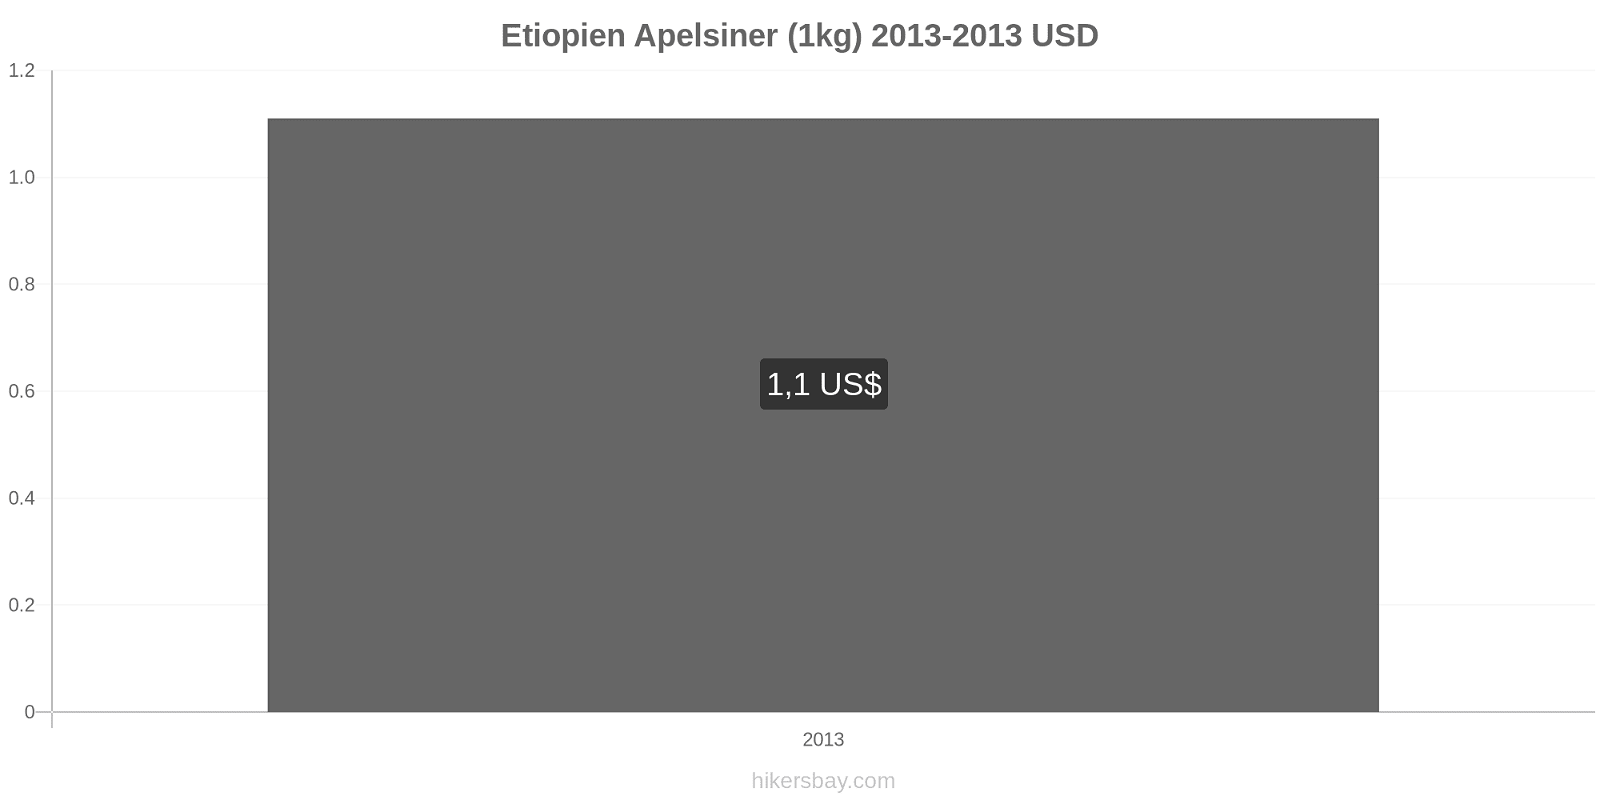 Etiopien prisändringar Apelsiner (1kg) hikersbay.com